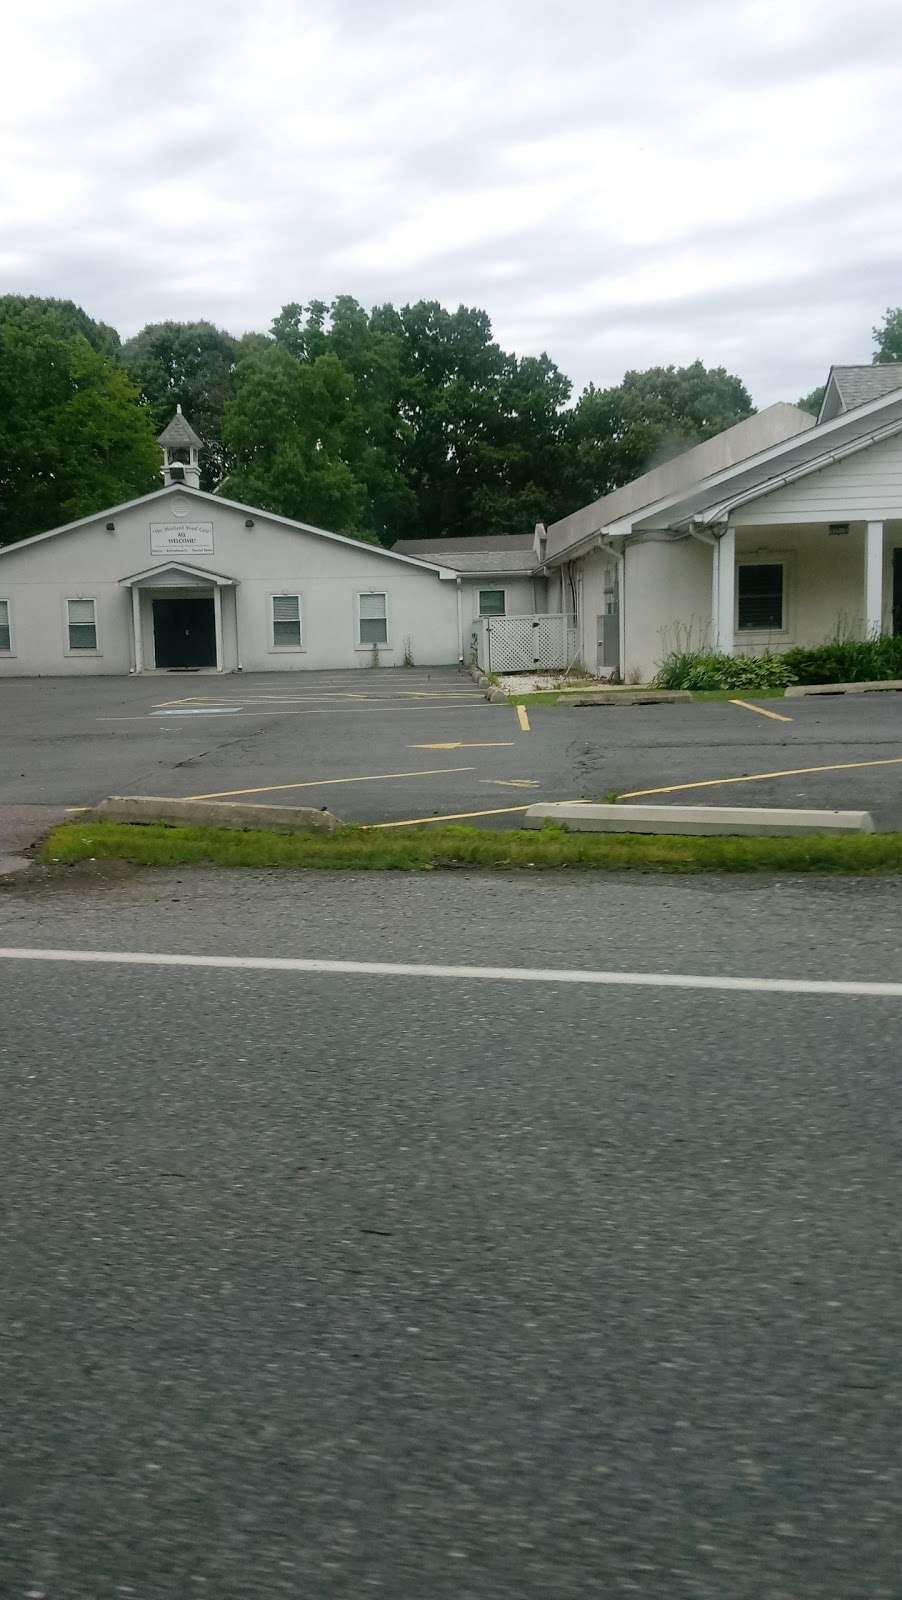 South County Community Church | 1320 Avalon Blvd, Shady Side, MD 20764 | Phone: (410) 867-4777